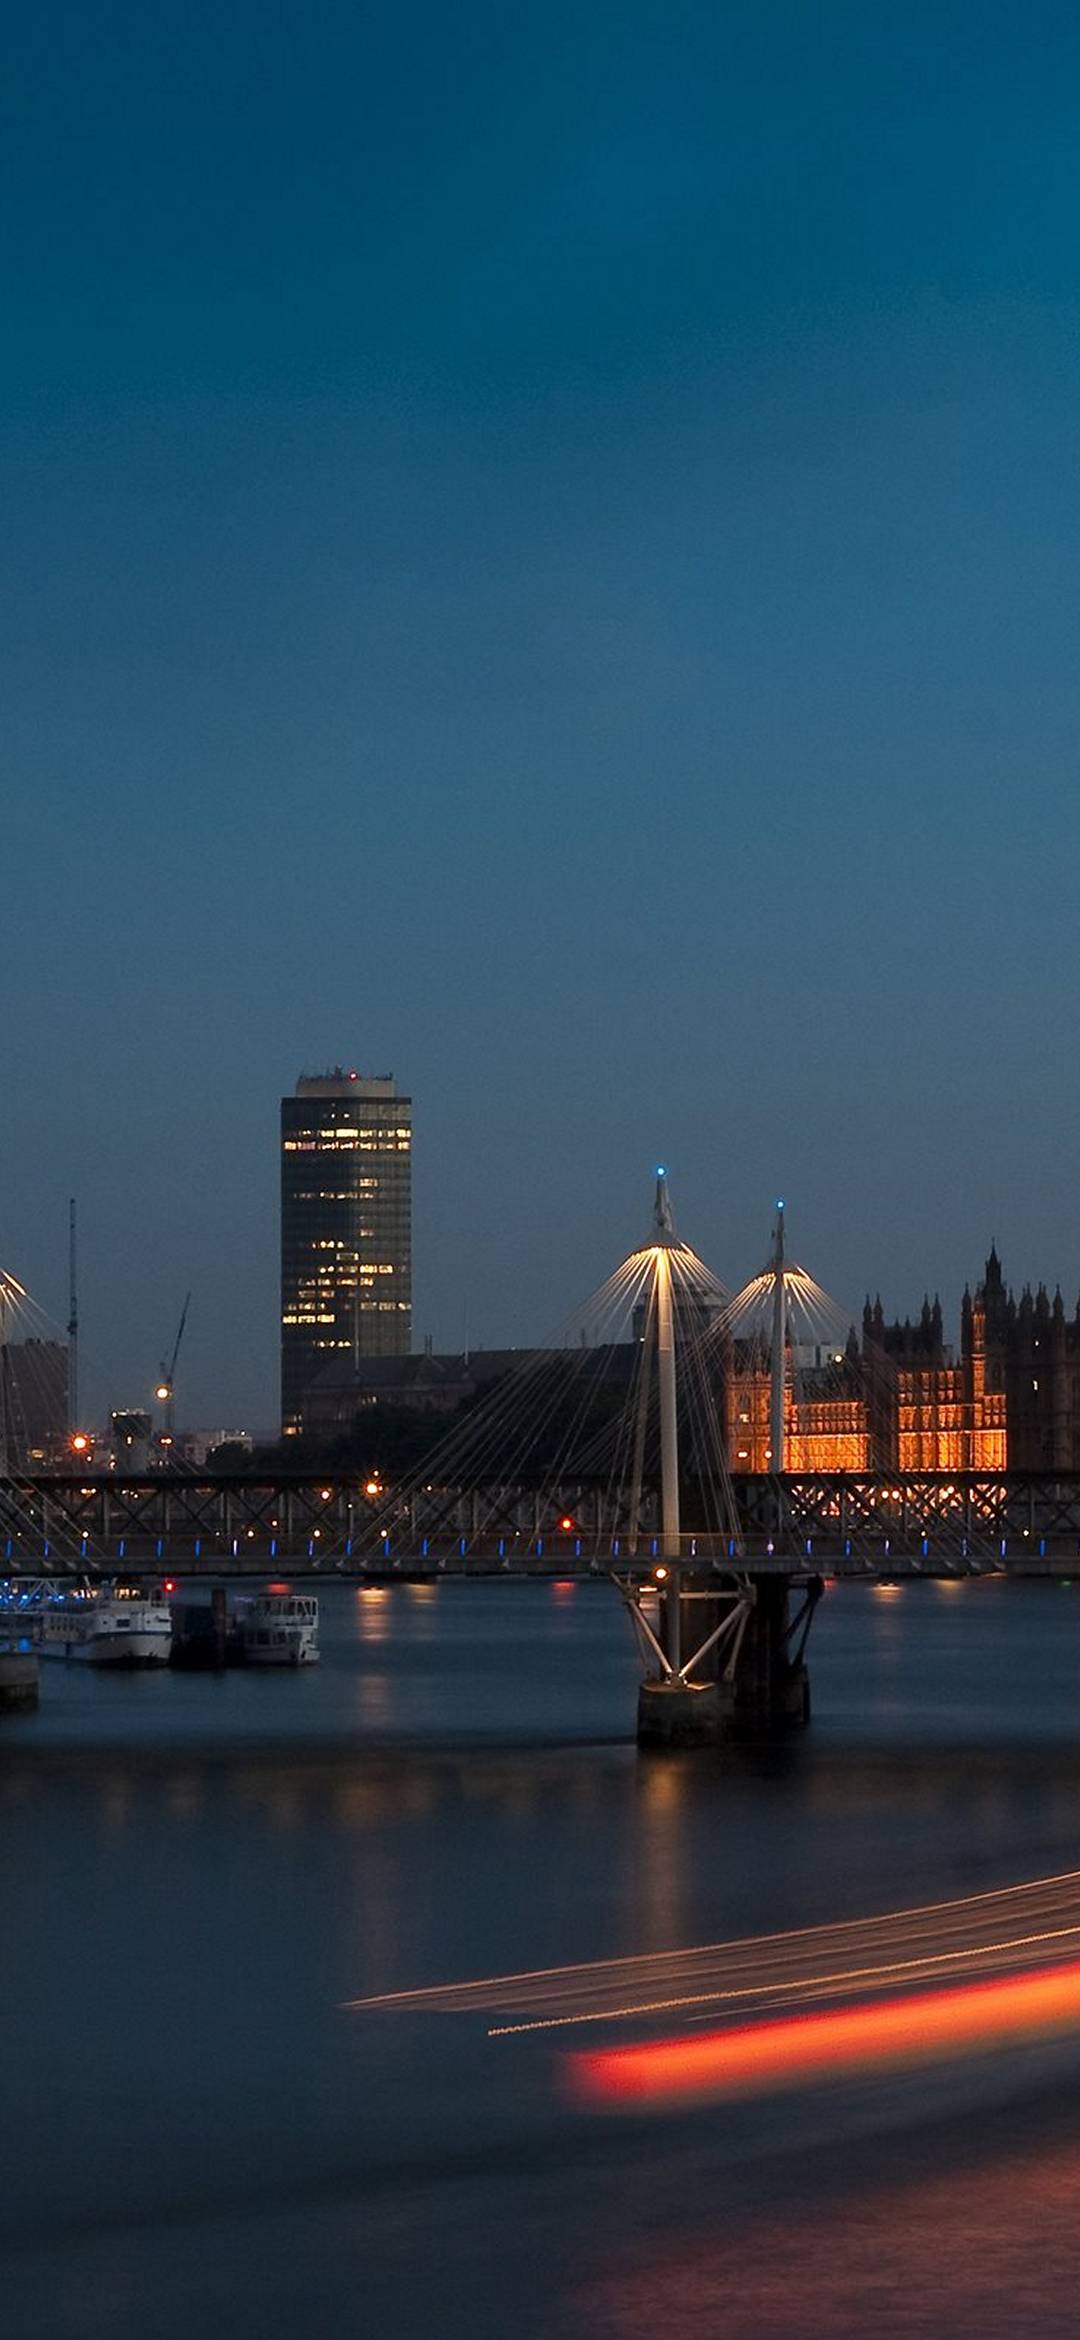 London Eye - Big Ben - [1080x2340]